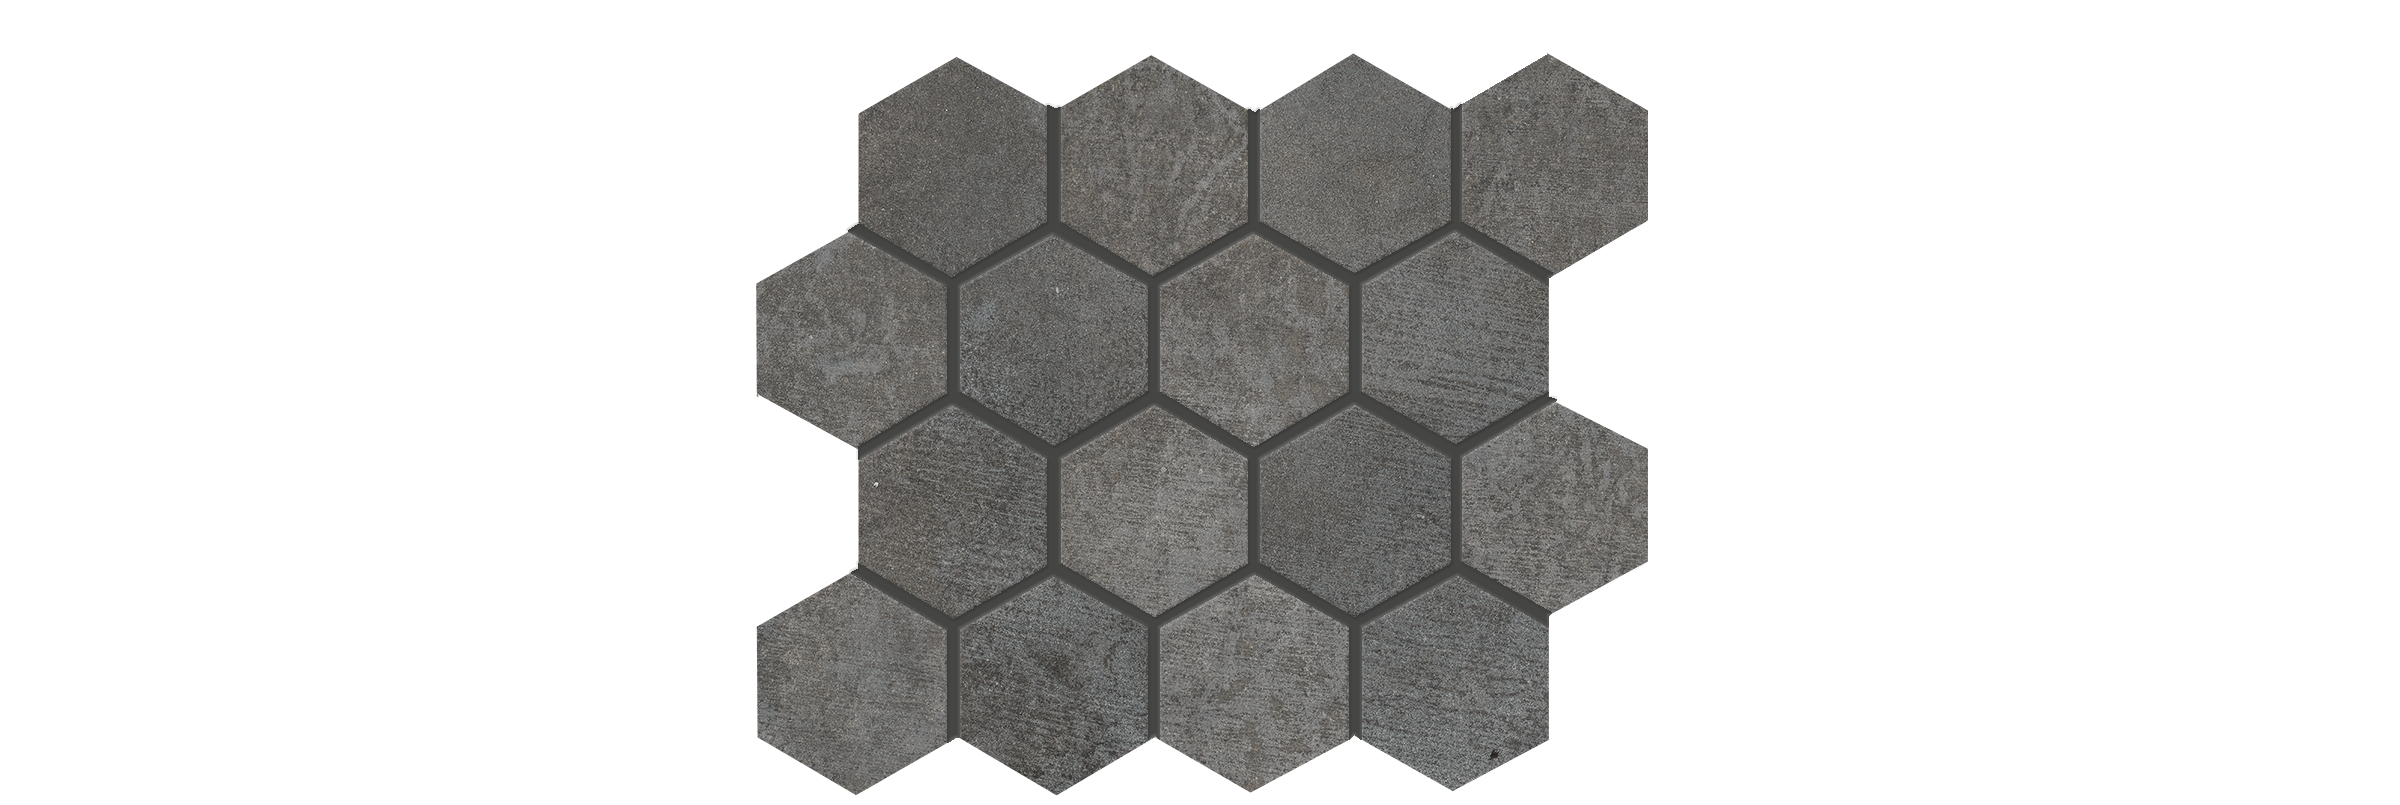 Cementello Dark Gray Matte 3x3 Hexagonal Mosaic